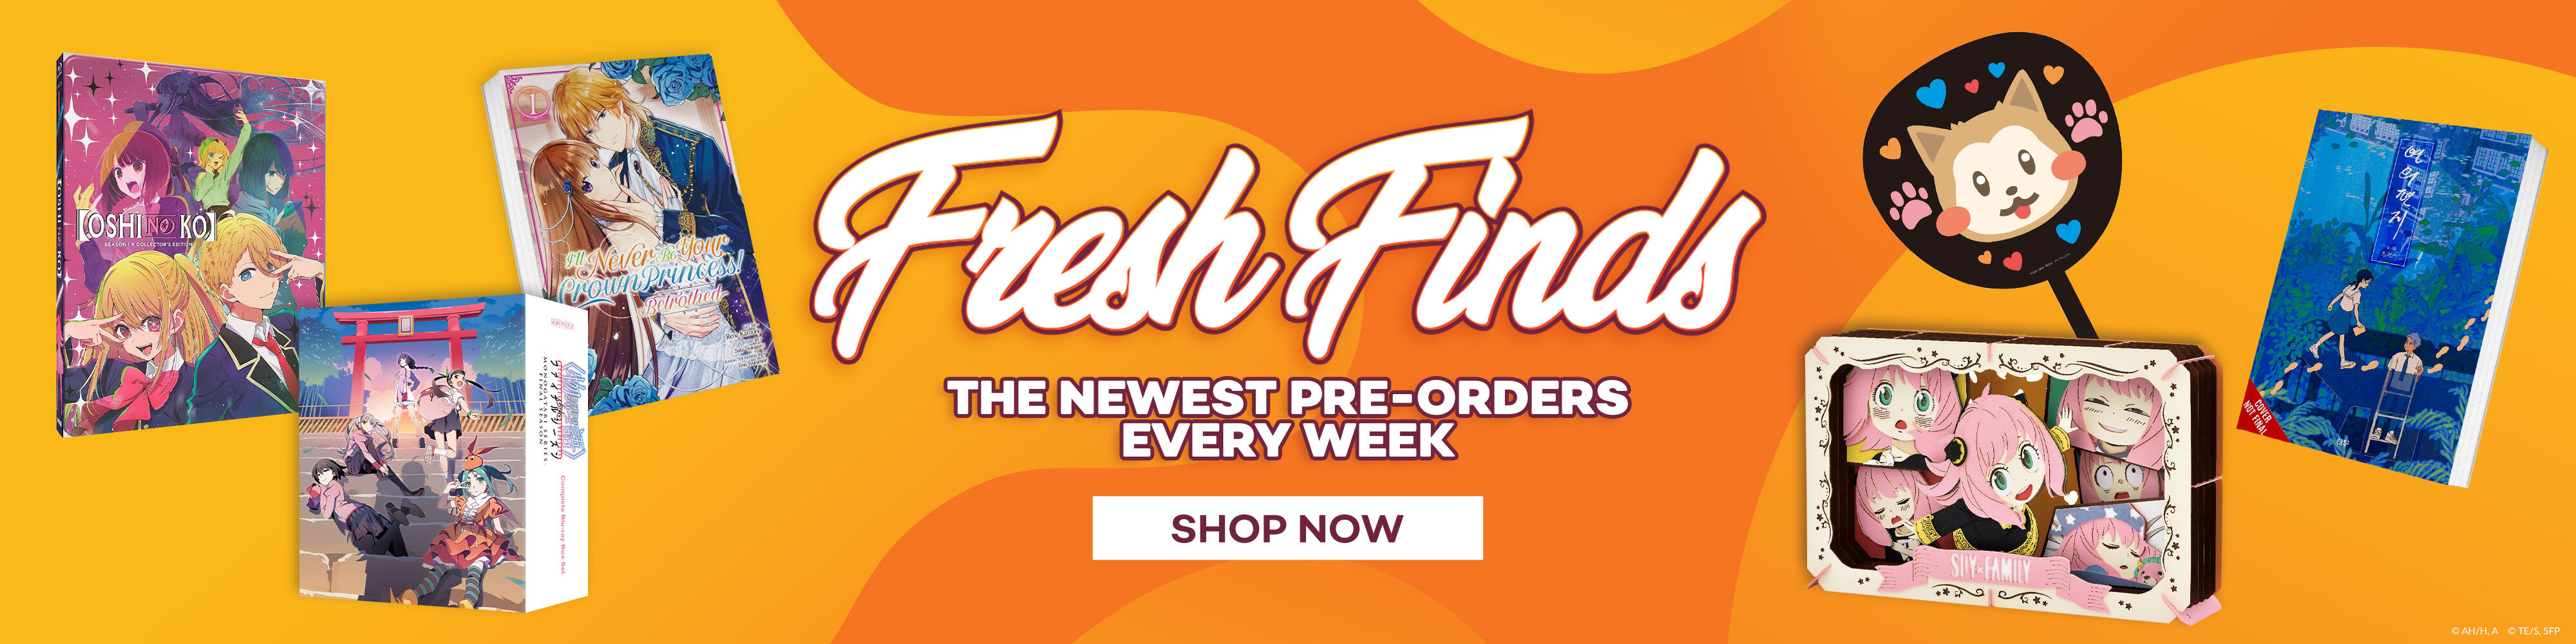  Crunchyroll Fresh Finds - Newest Pre-orders Every Week